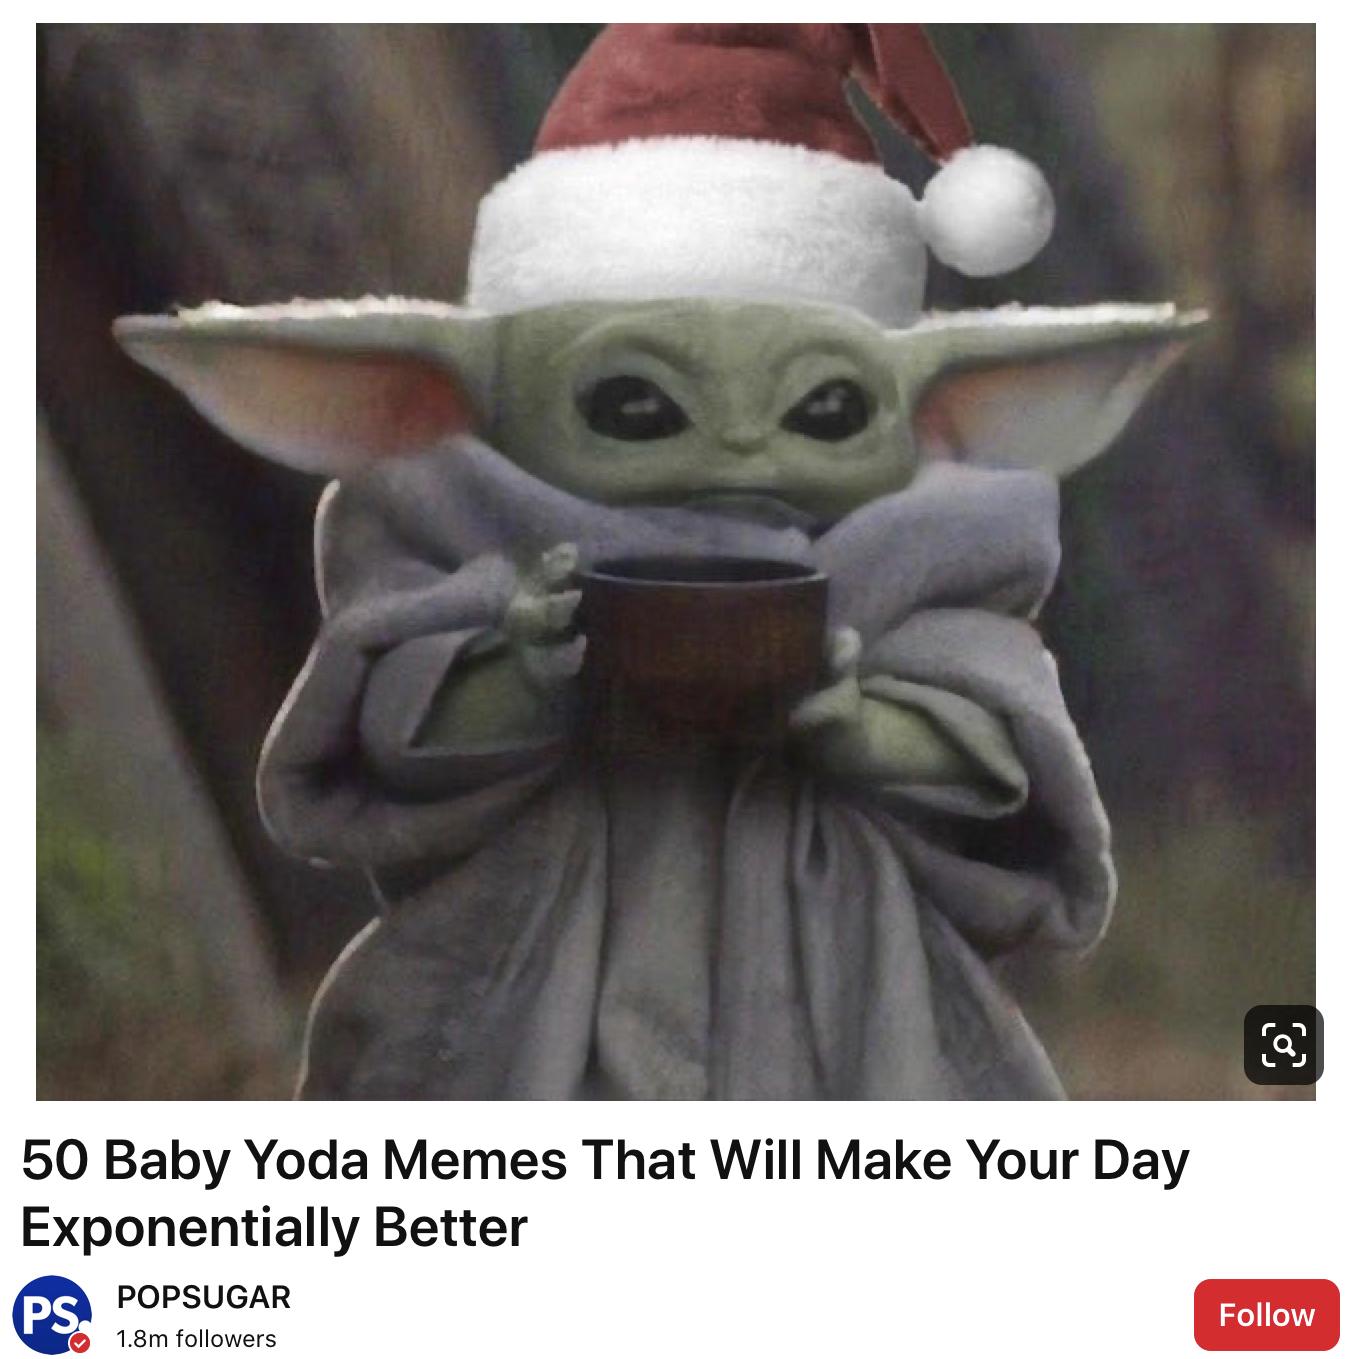 19 Adorable Baby Yoda Memes for Christmas 2020 653